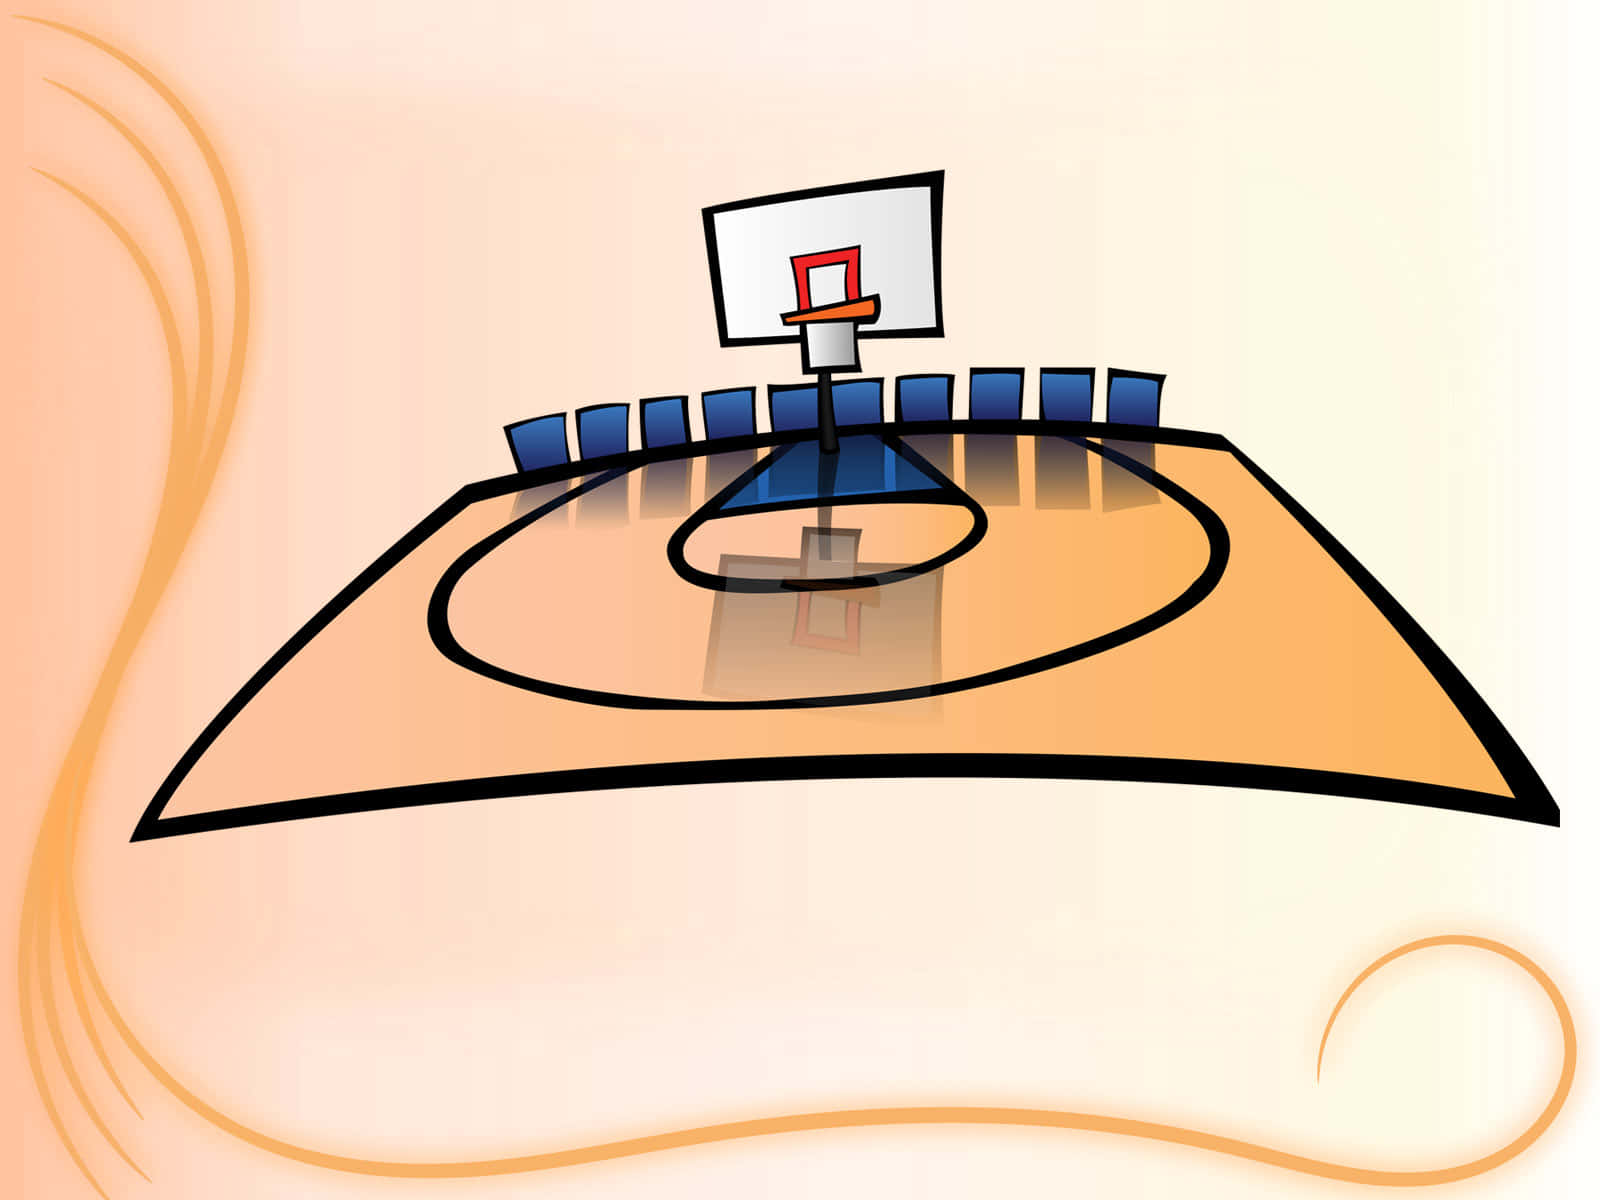 Abstract Basketball Court Illustration